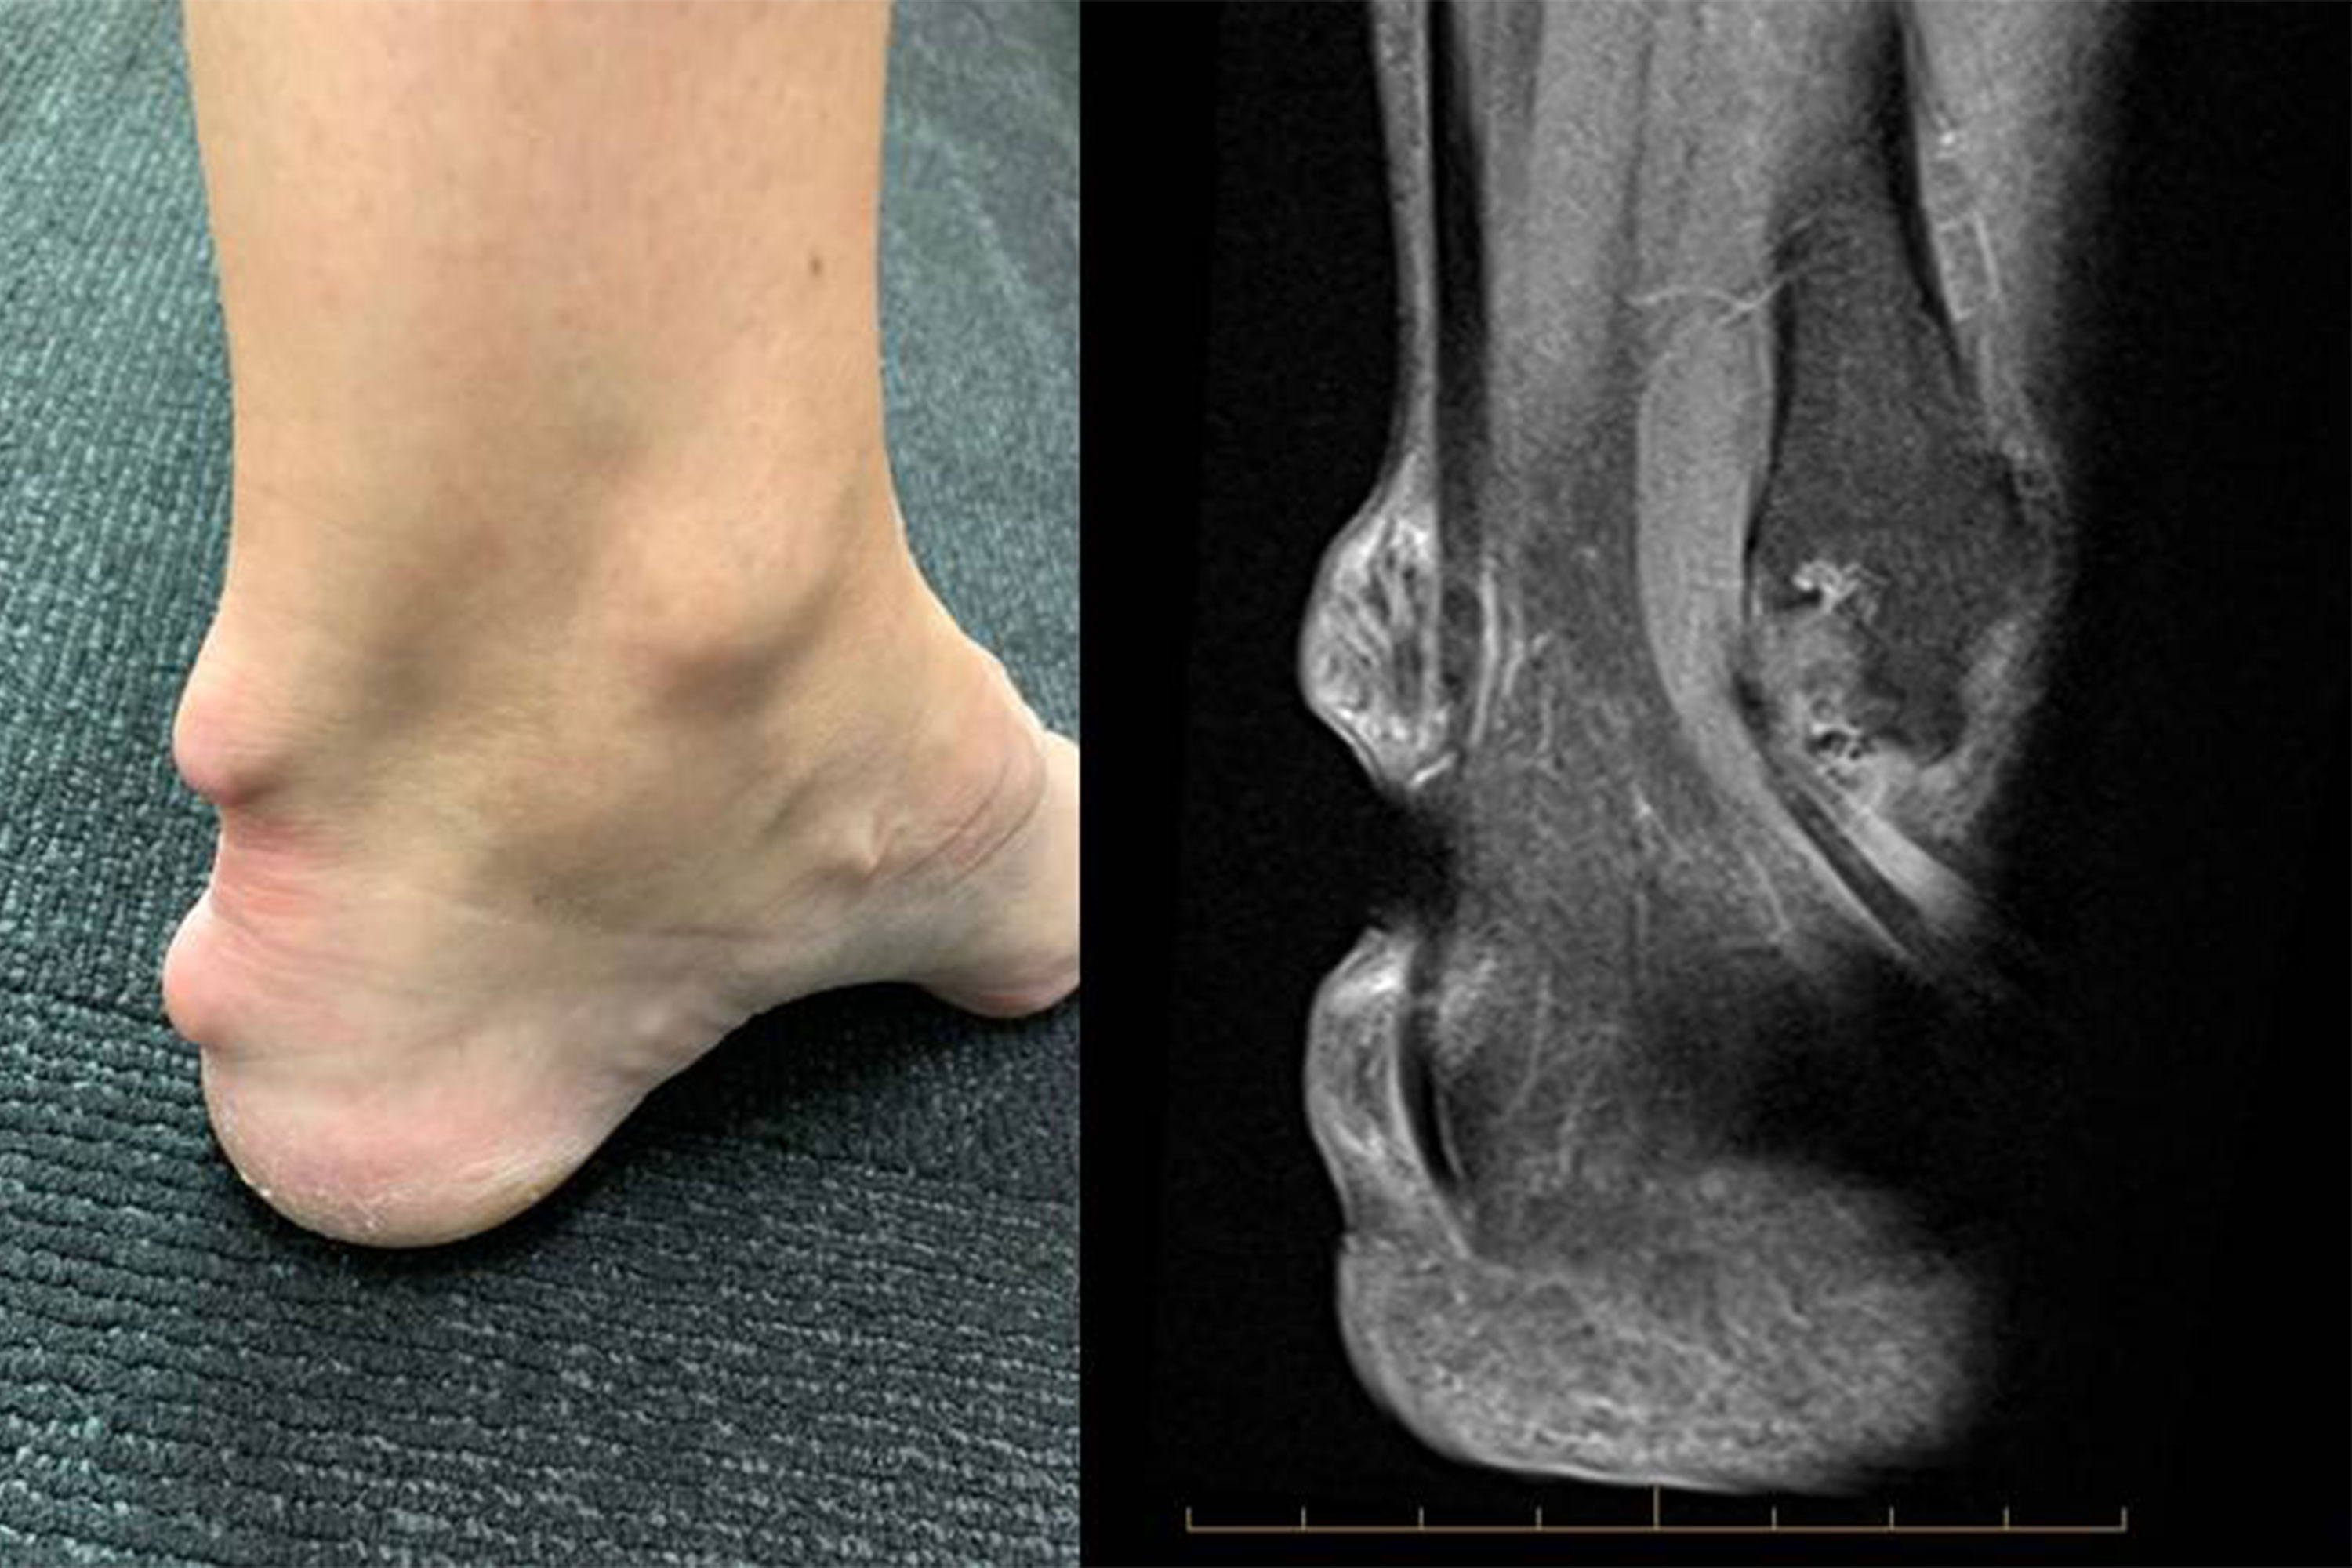 𝕄𝕦𝕤𝕔𝕝𝕖 & 𝕁𝕠𝕚𝕟𝕥 ℙ𝕋 on Instagram: Ankle osteoarthritis